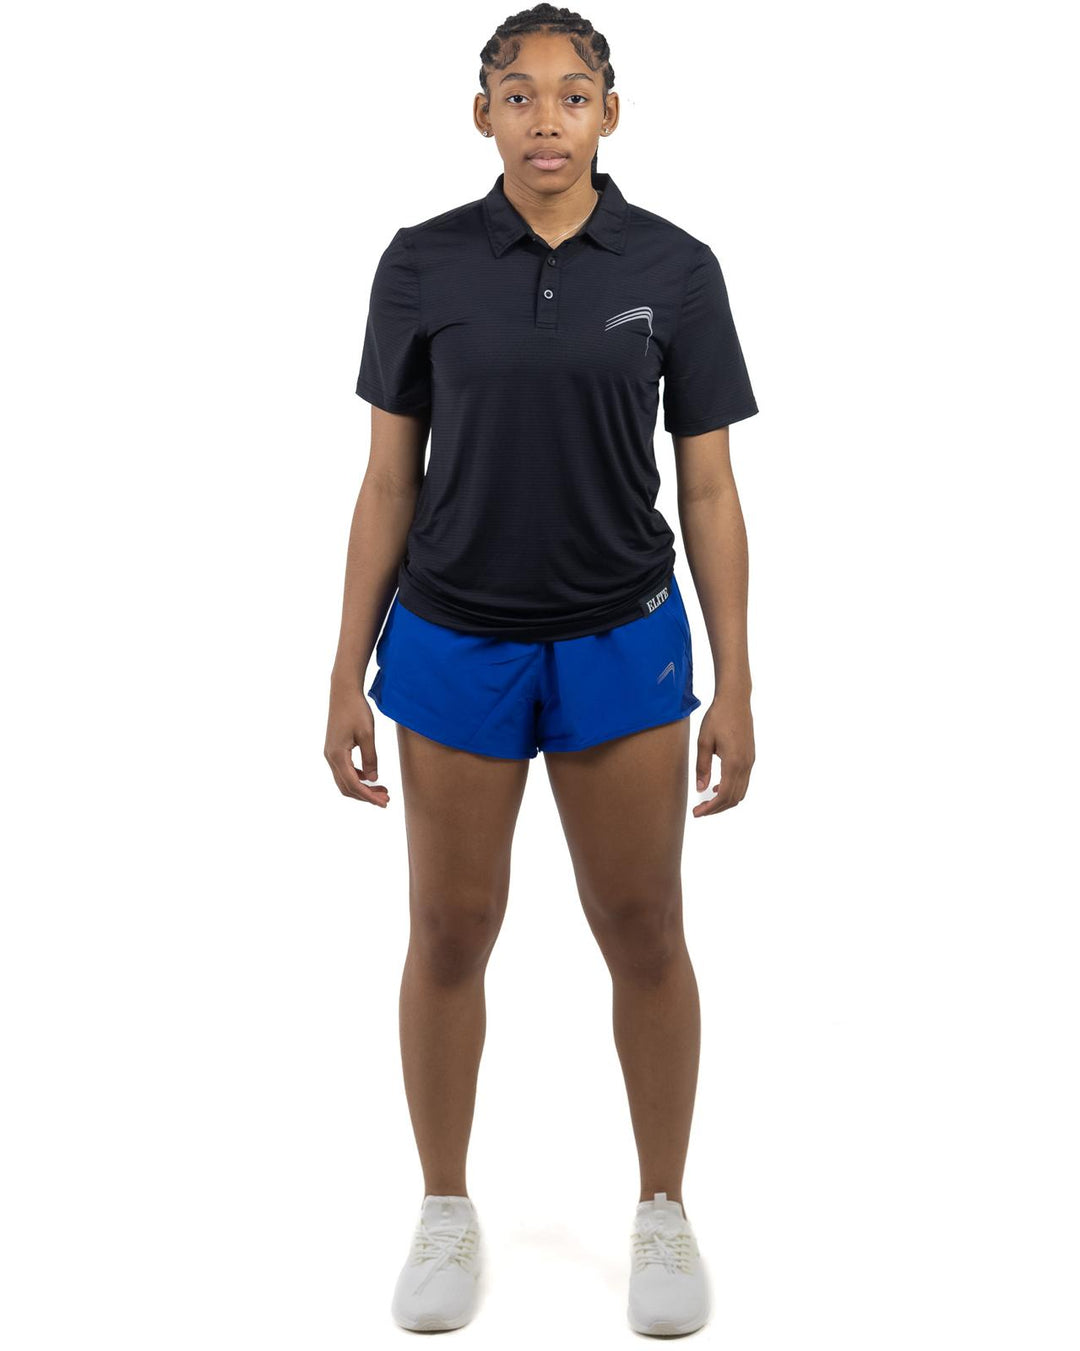 Women’s runner shorts - Blue